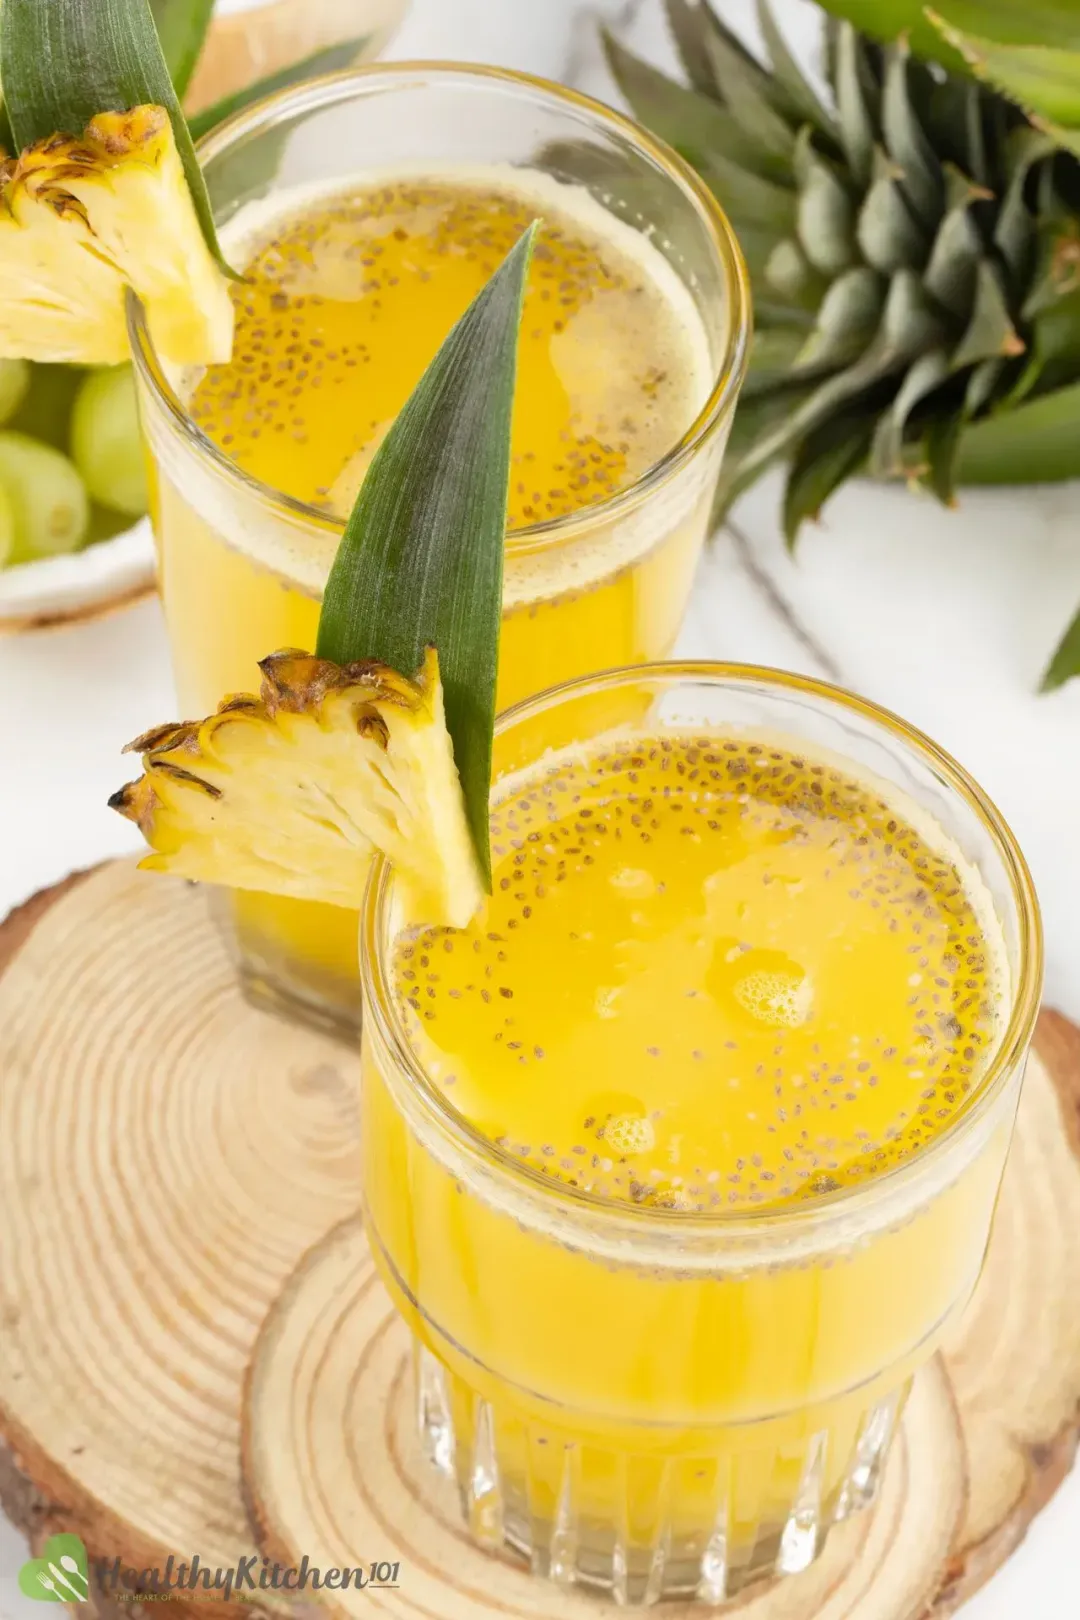 Calories in Added Sugar Free Pineapple Juice